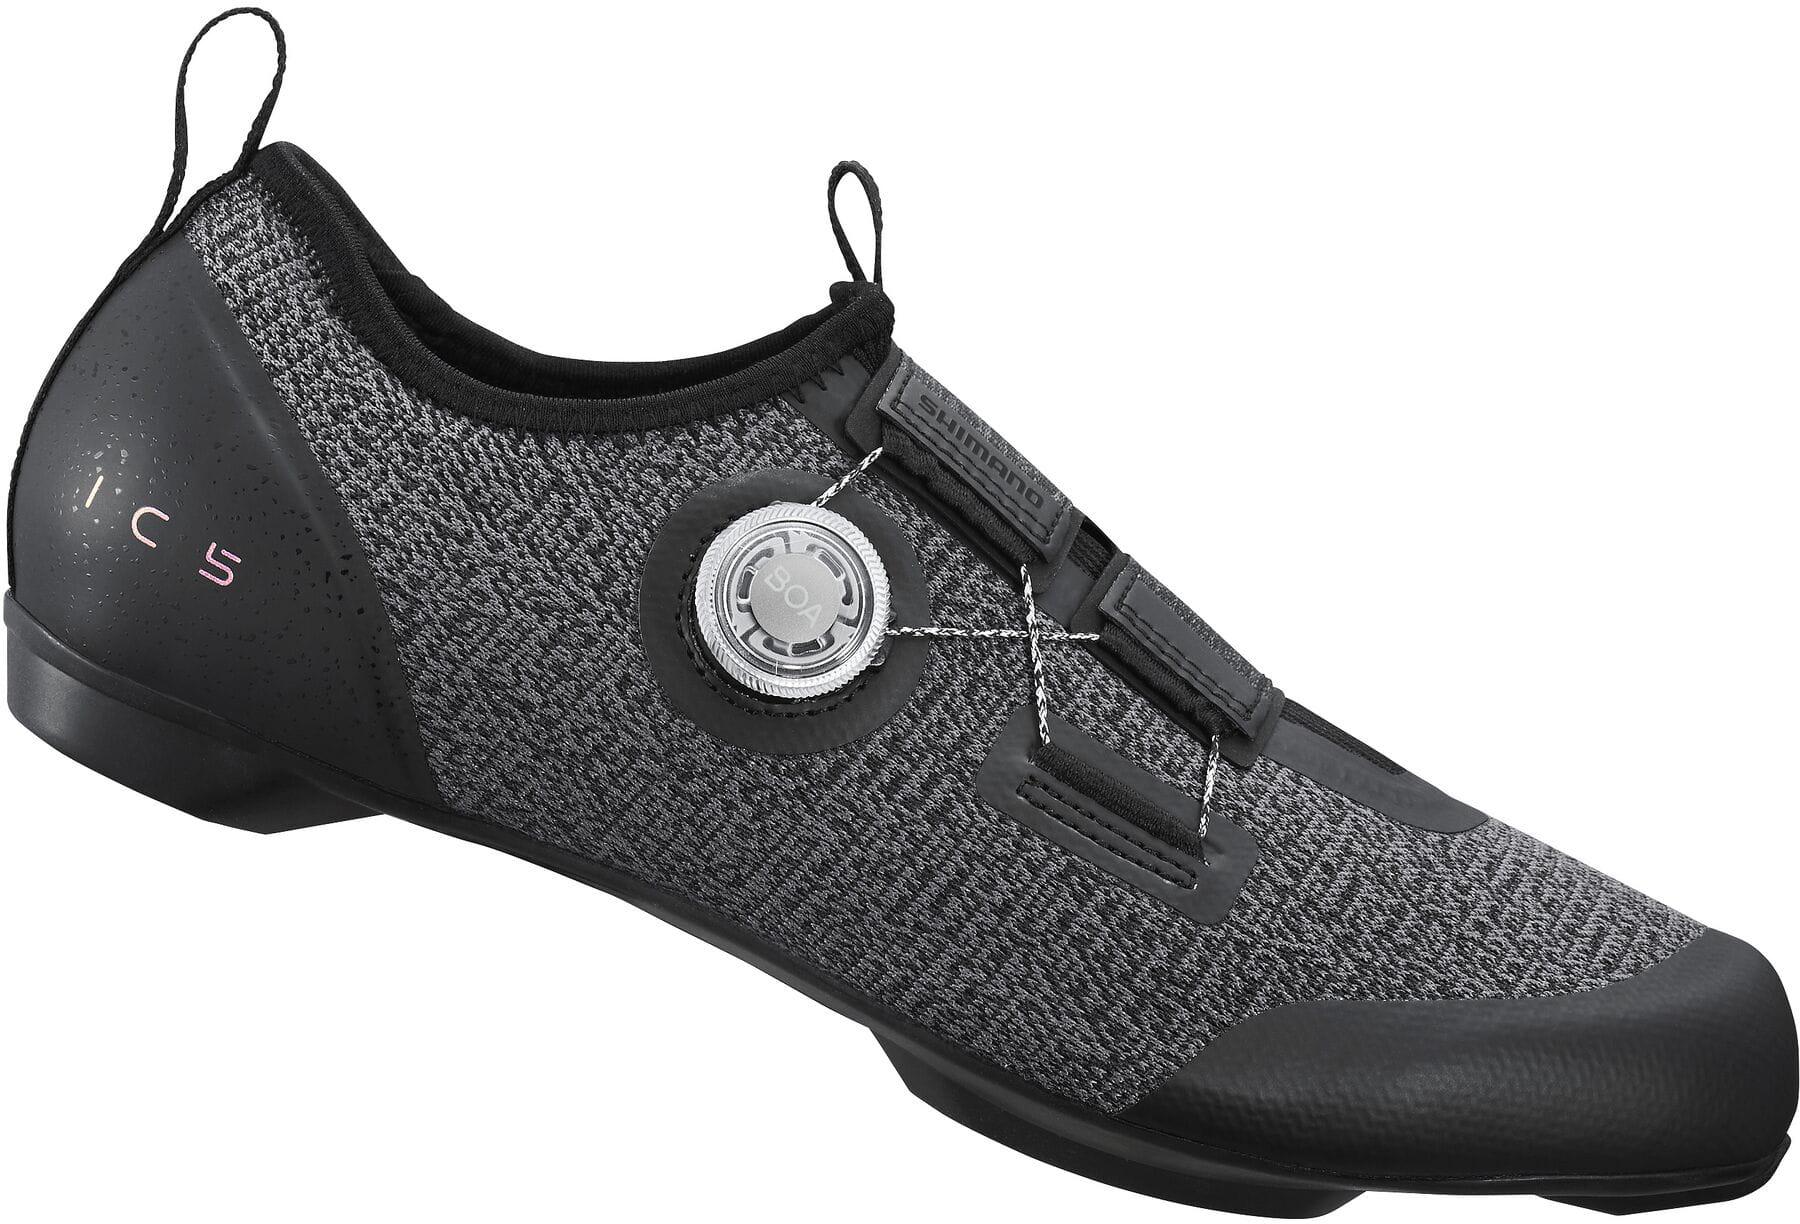 Shimano Ic501 Indoor Cycling Shoes - Black